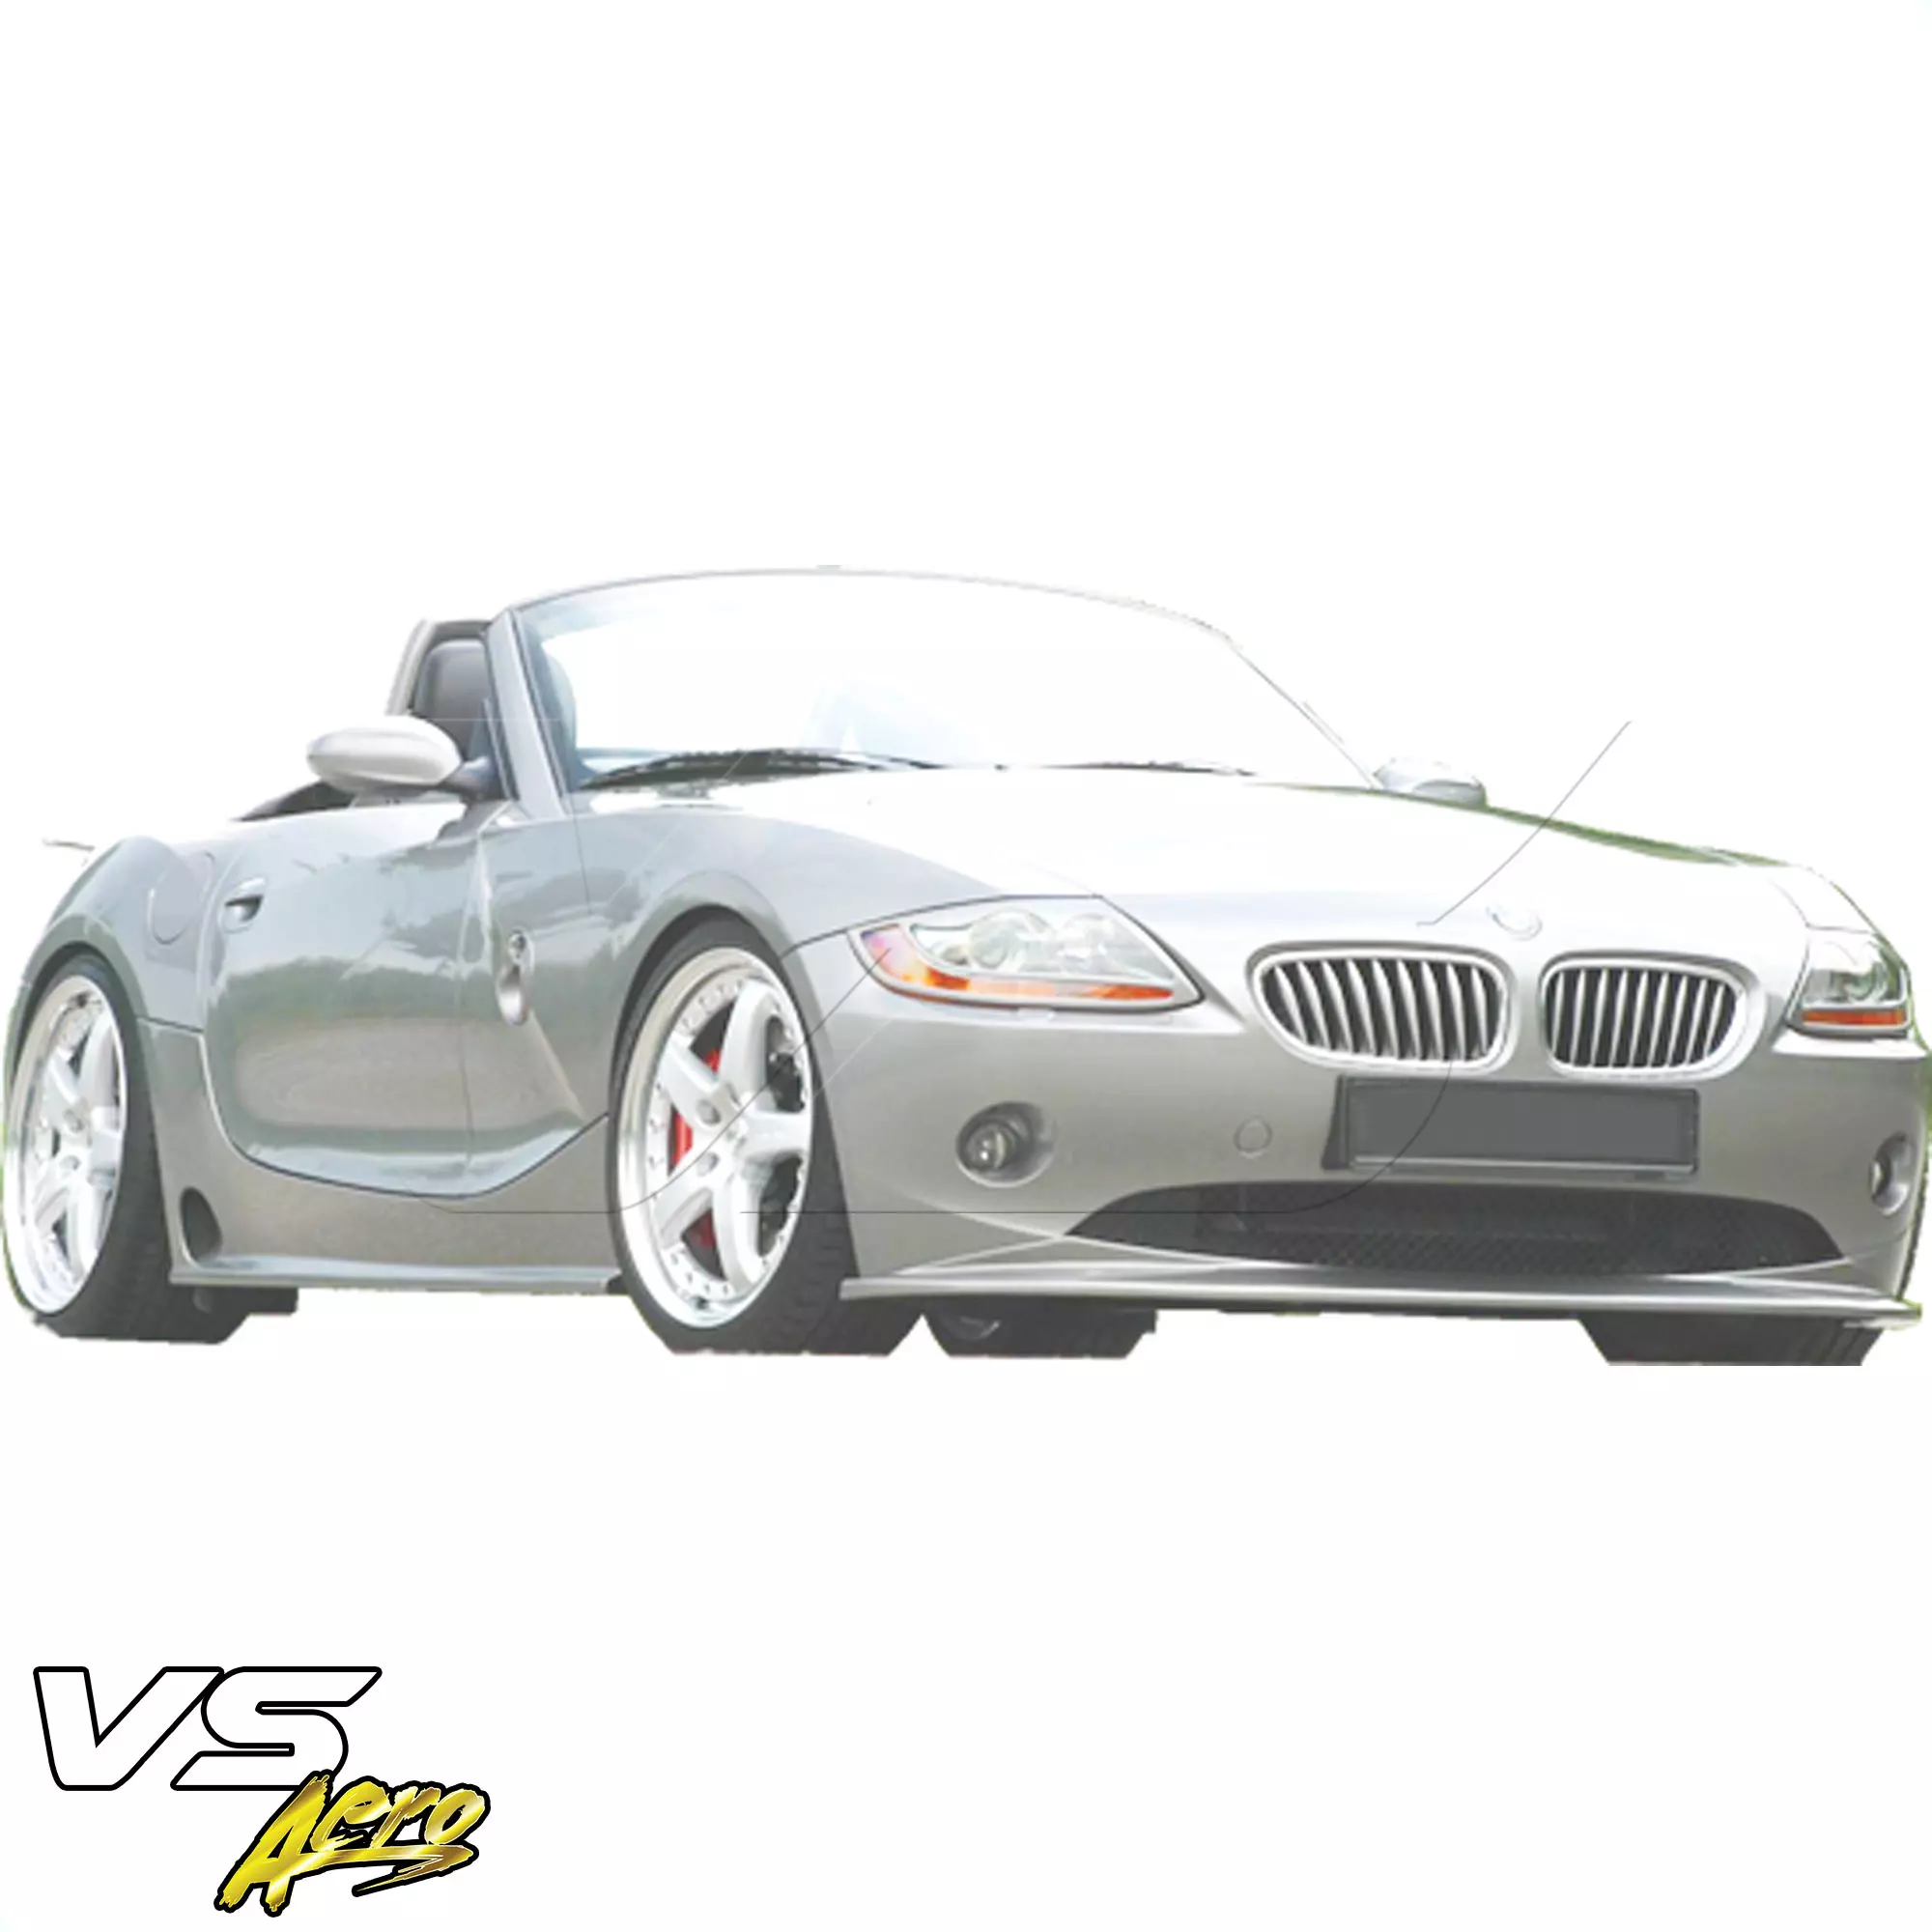 VSaero FRP HAMA Body Kit 4pc > BMW Z4 E85 2003-2005 - Image 13